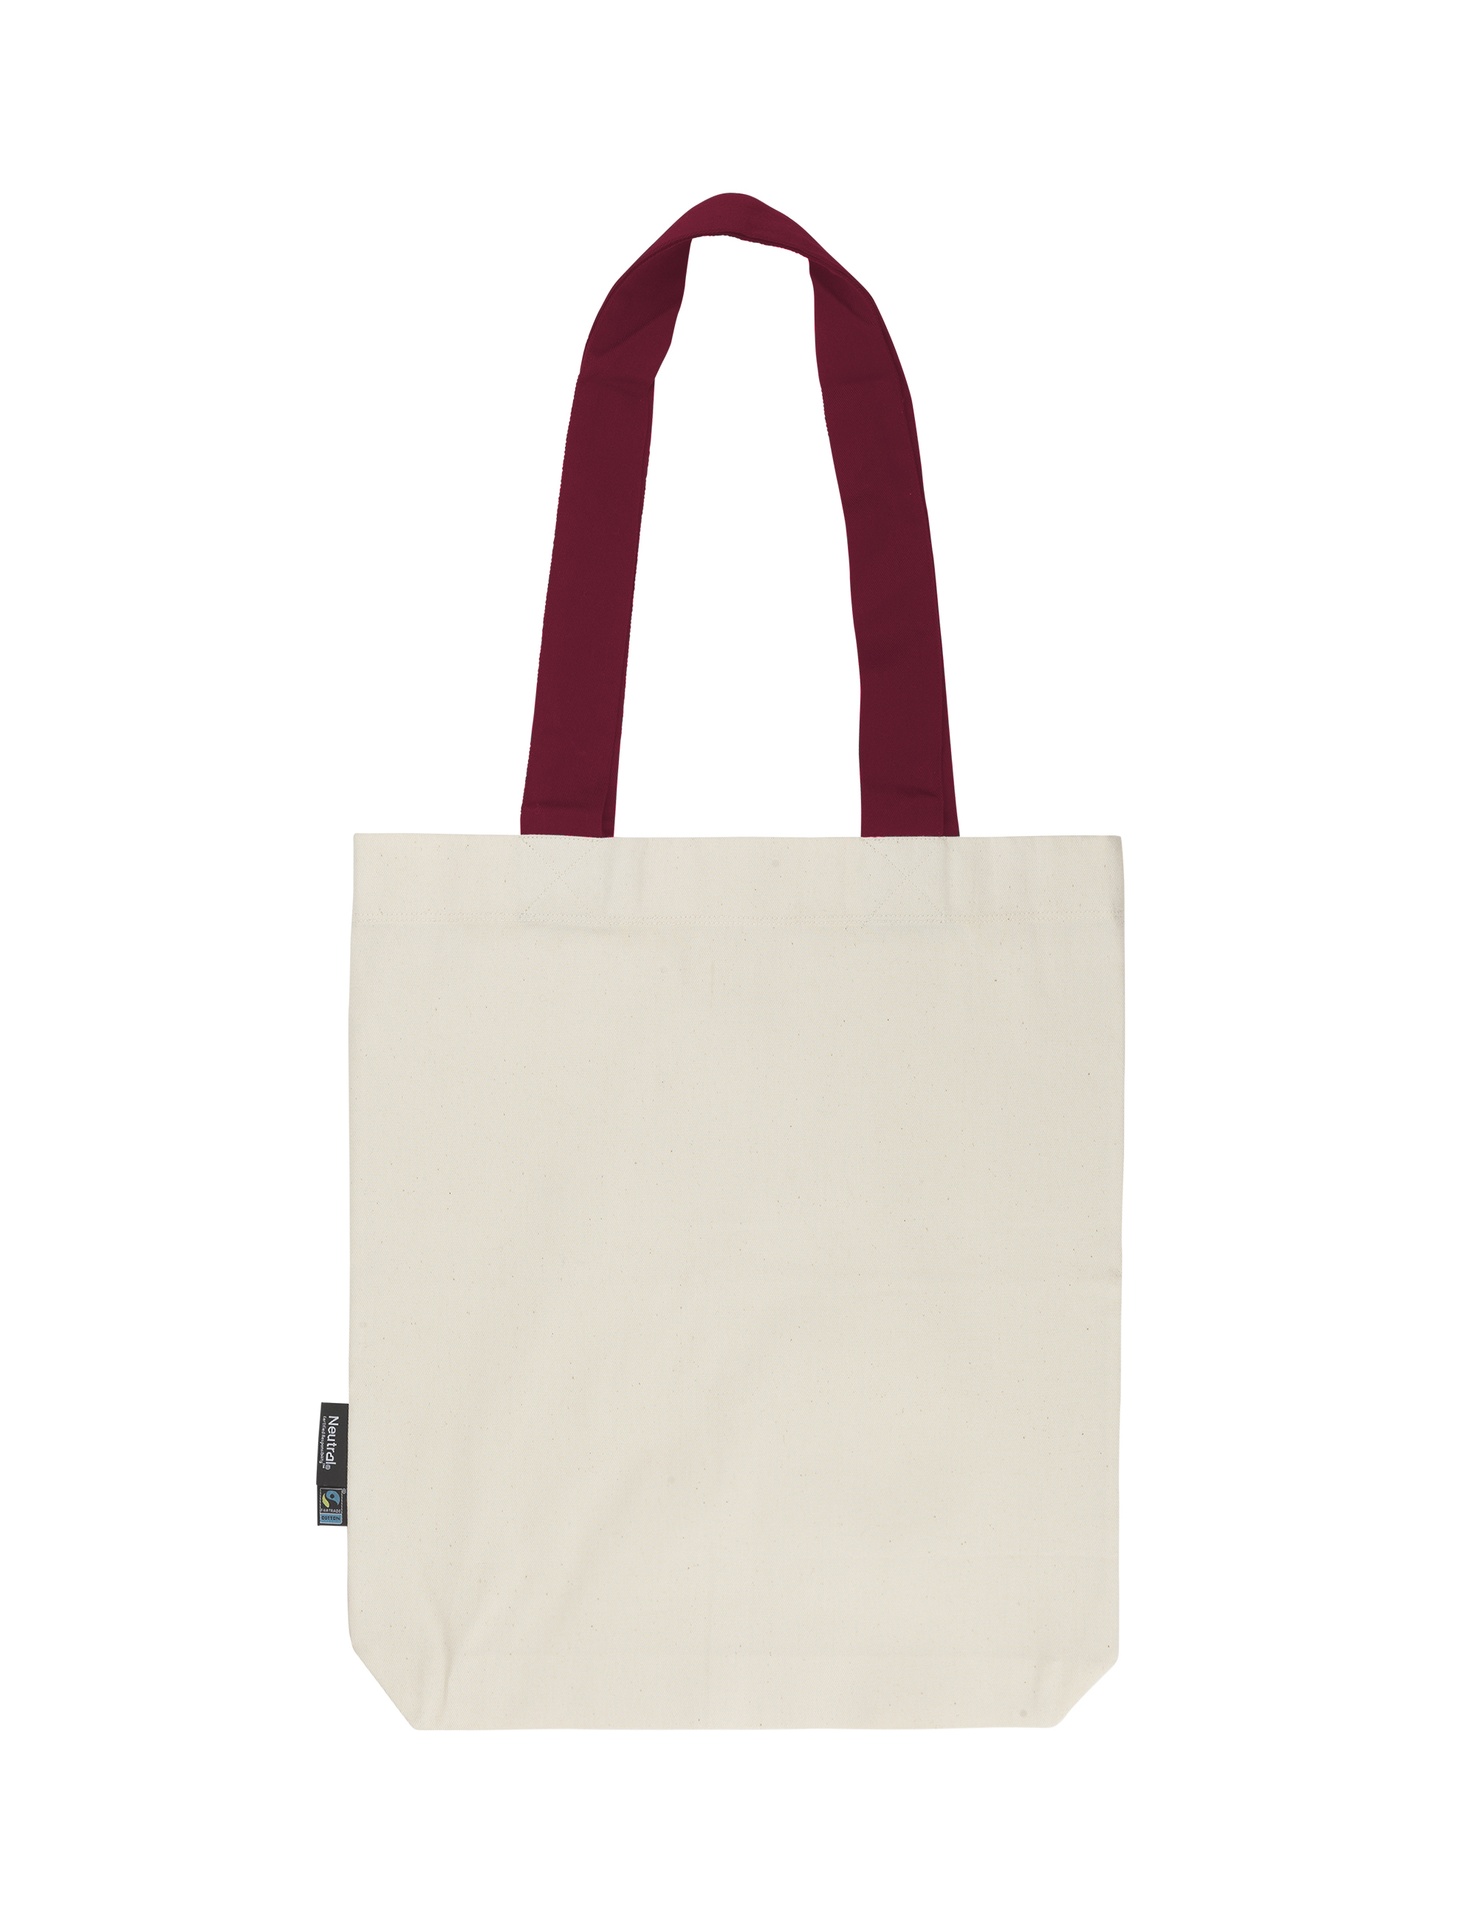 [PR/05778] Twill Bag With Contrast Handles (Nature/Bordeaux 26)